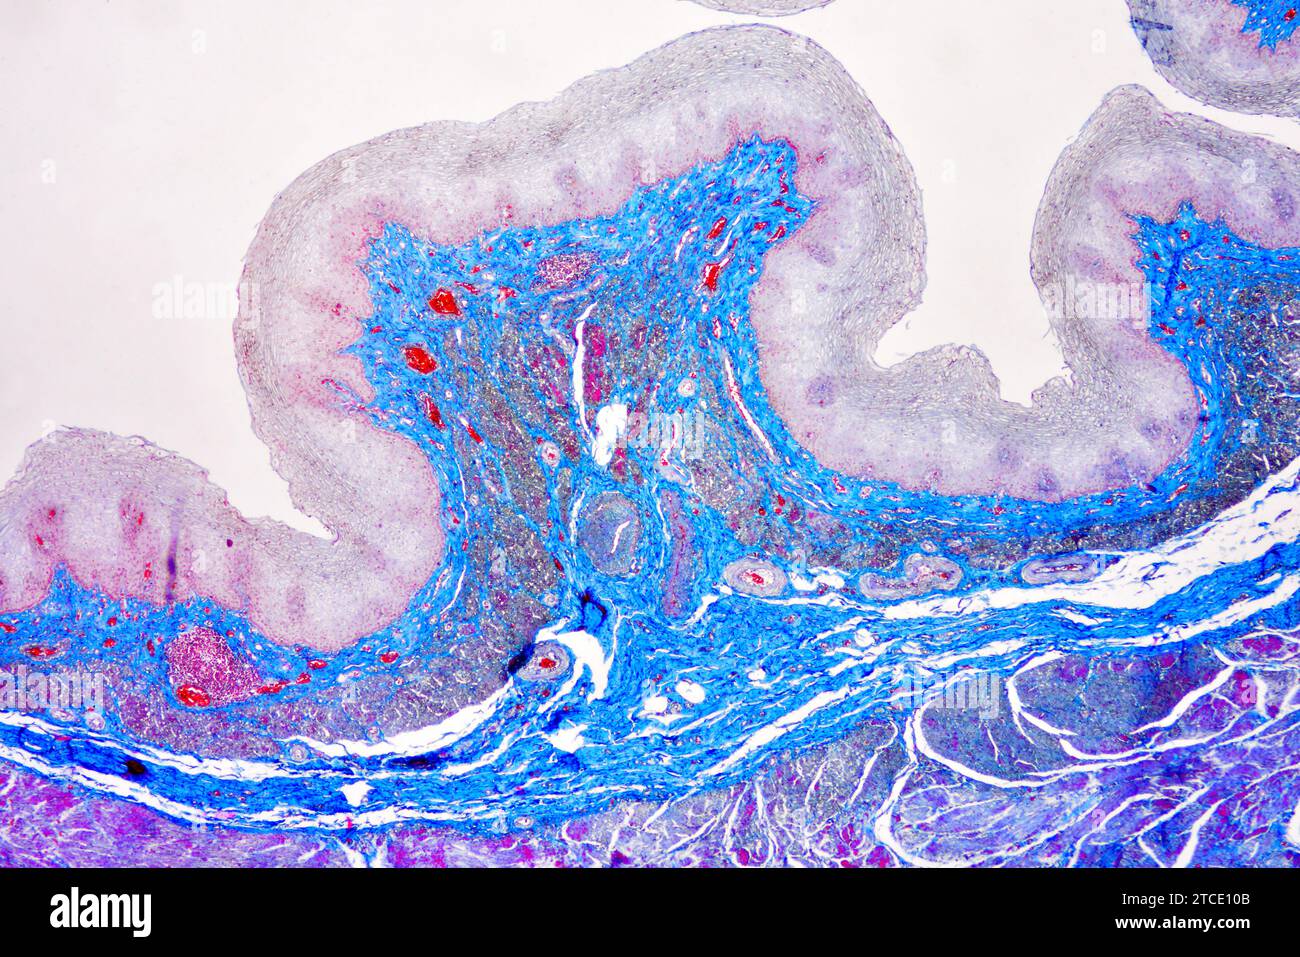 Esofago o esofago umano che mostra epitelio squamoso stratificato. Microscopio ottico X40. Foto Stock